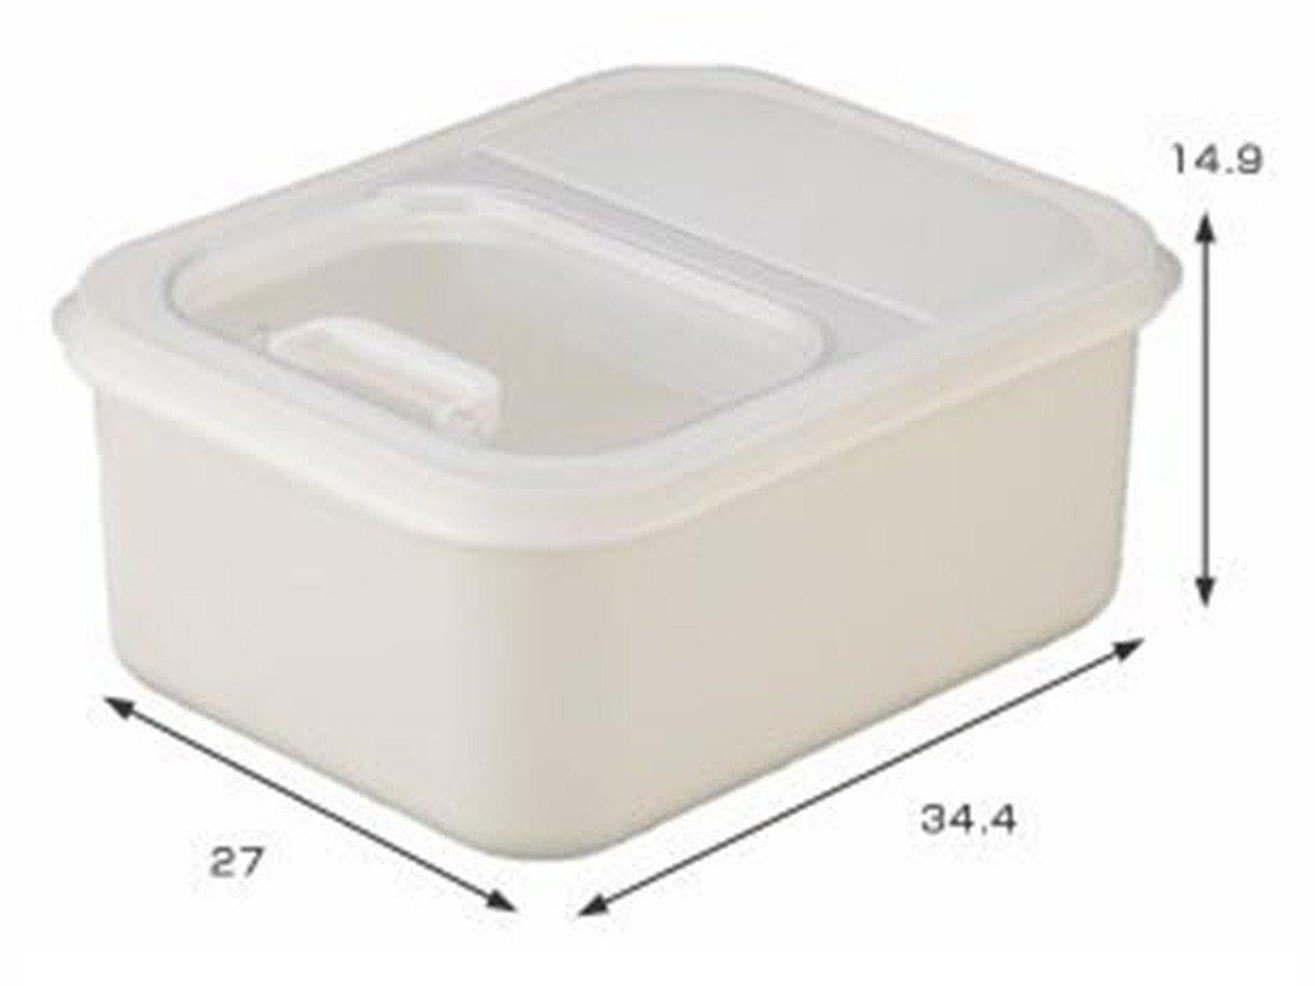 INOMATA Japanese Rice Box kg